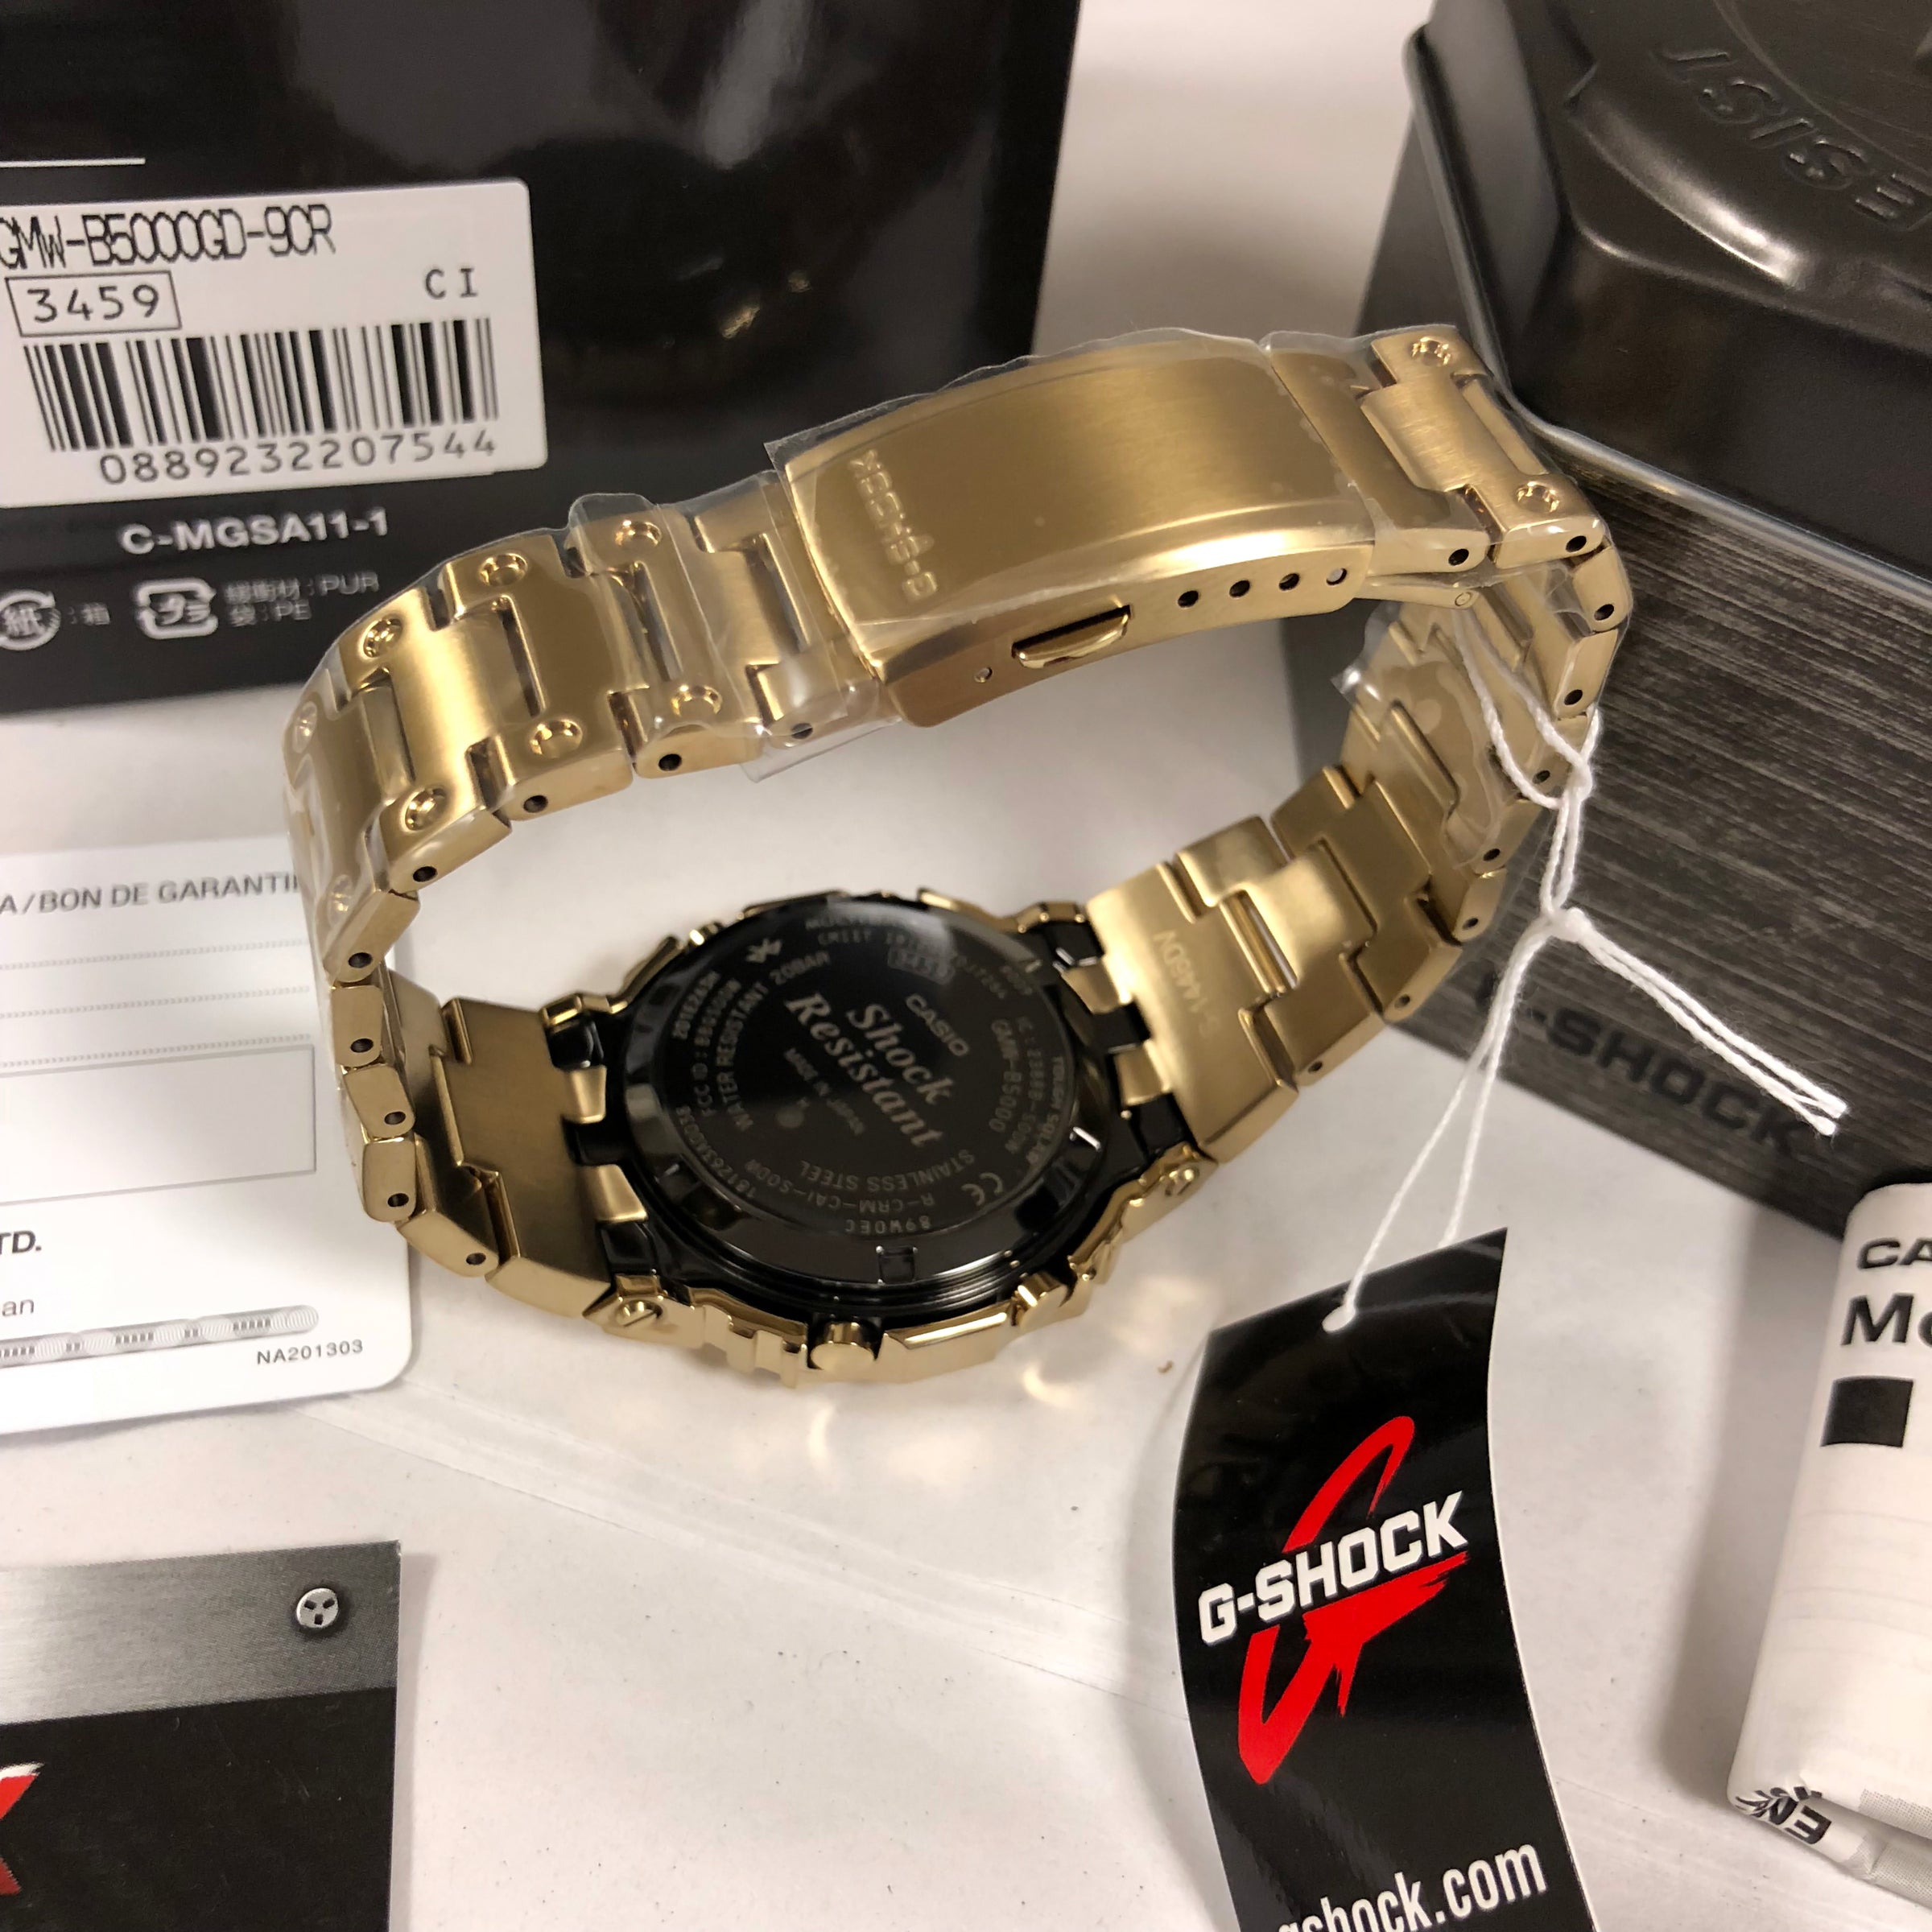 CASIO G-SHOCK GMW-B5000GD-9 Bluetooth Full Gold Square Watch – NAGI